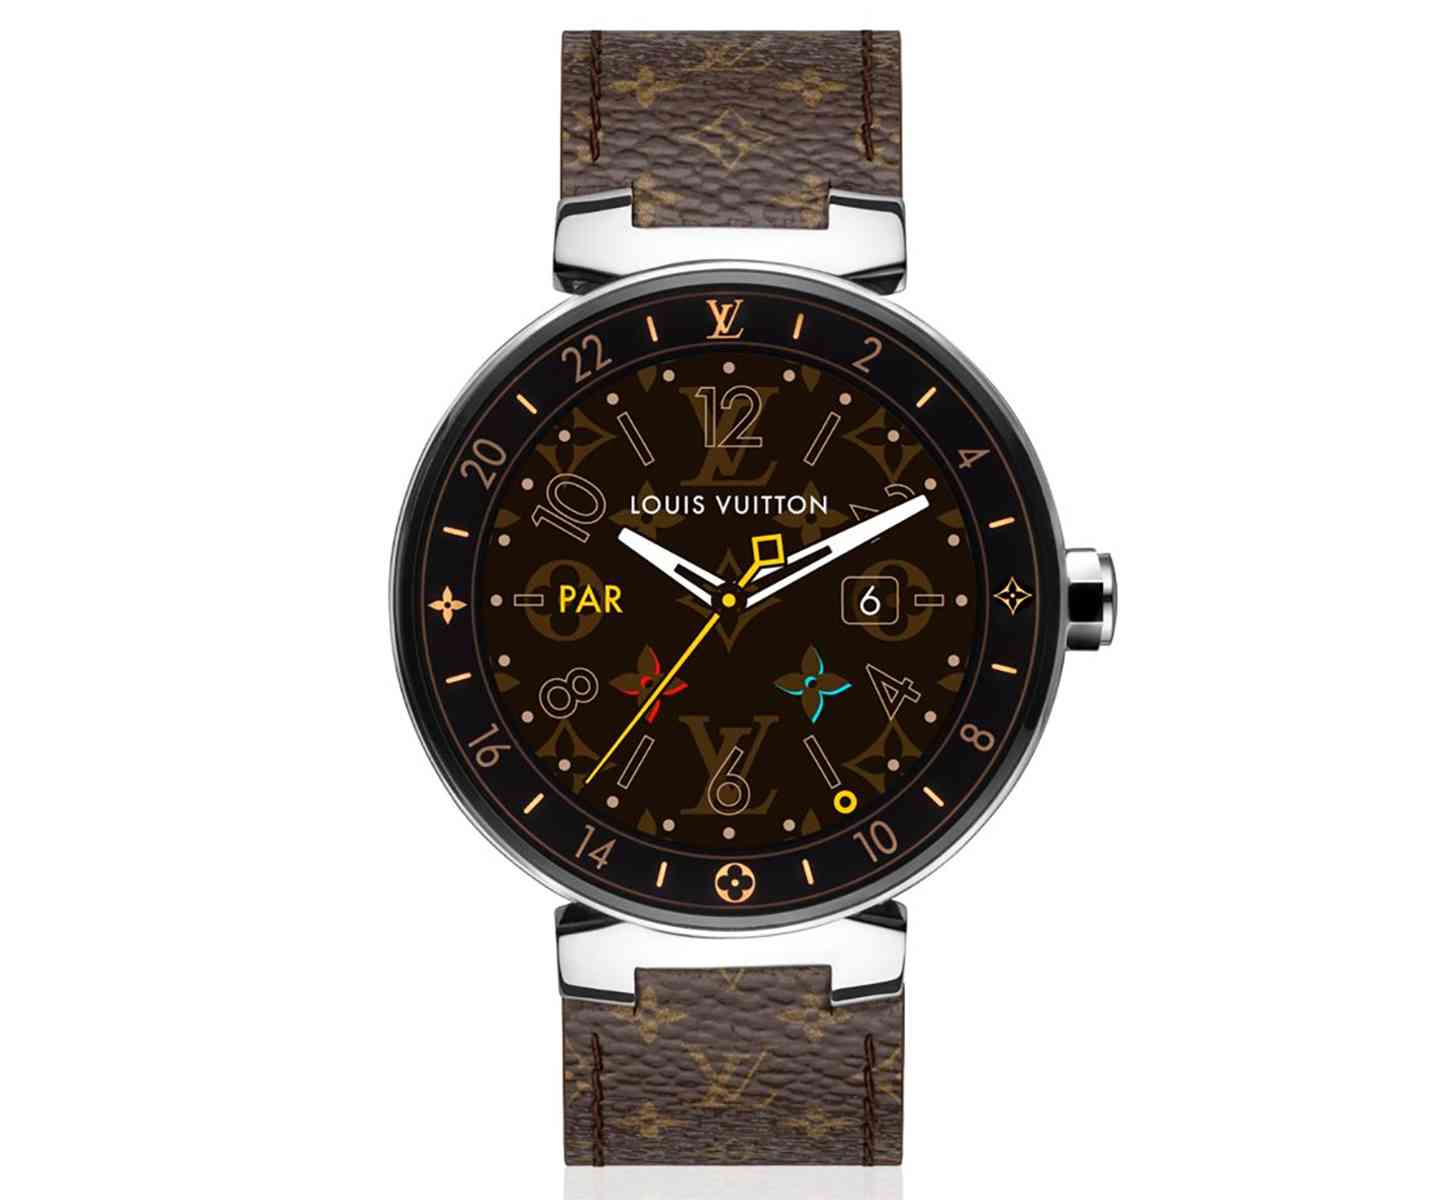 Louis Vuitton Tambour Horizon Monogram Android Wear smartwatch